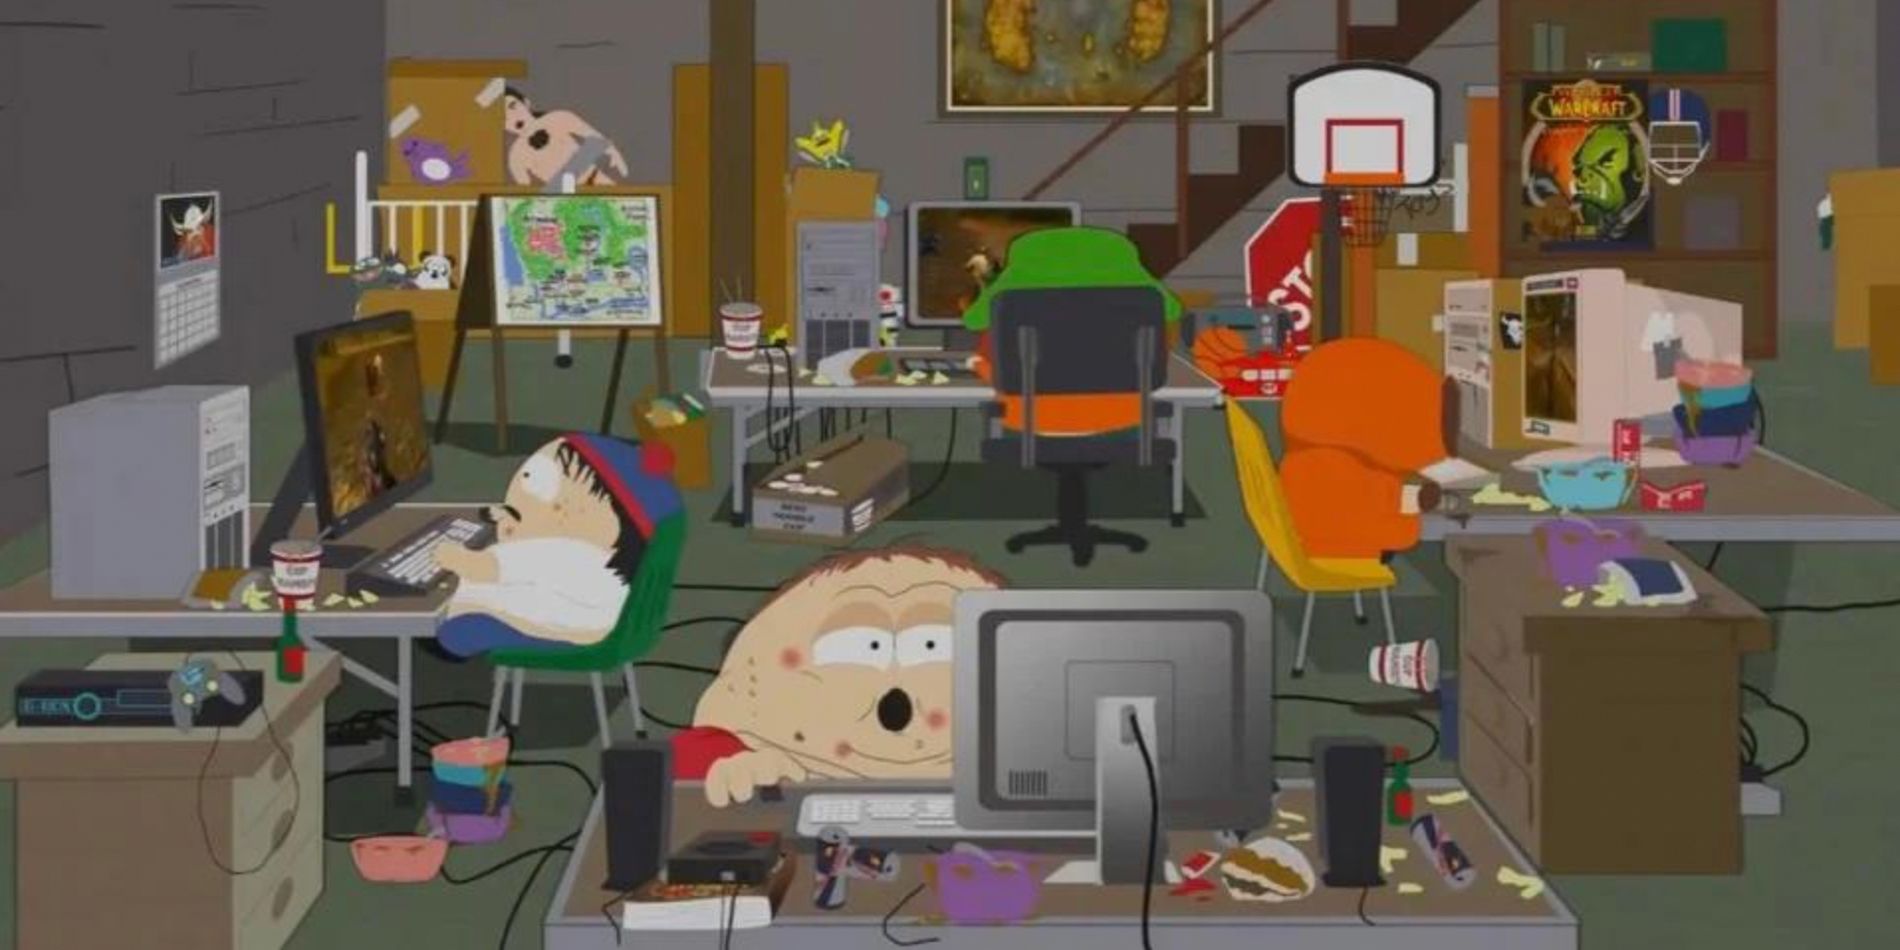 The boys' gaming den in South Park episode, "Make Love, Not Warcraft"